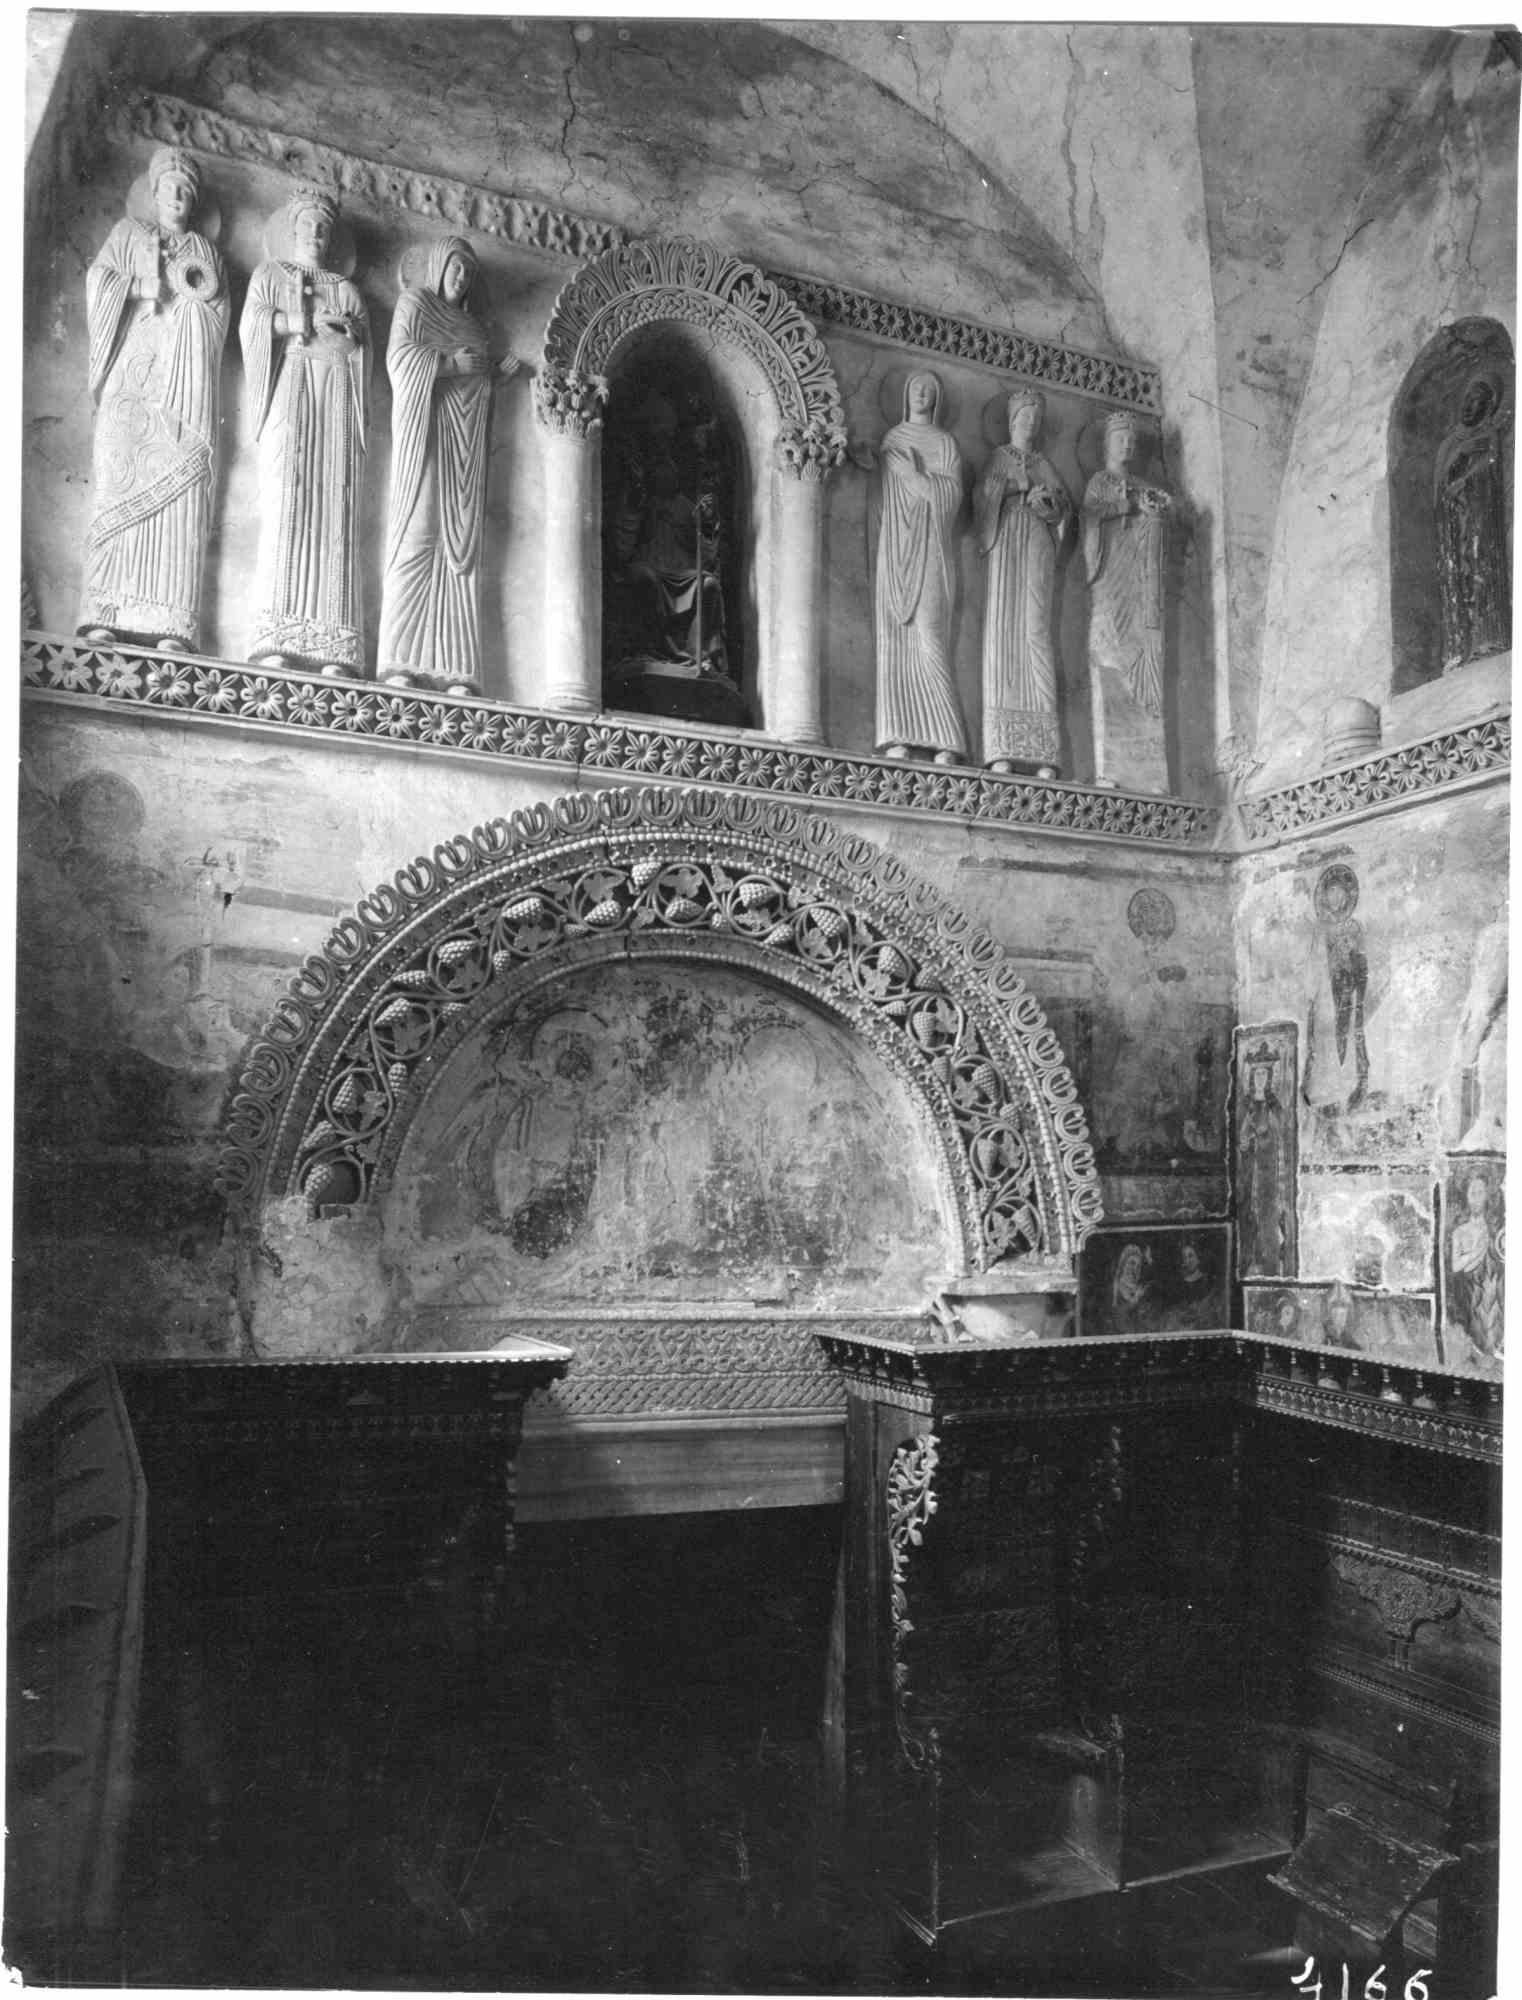 Osvaldo Böhm Black and White Photograph - Longobardo Temple in Venice - Vintage Photo by Osvaldo Bohm - Early 20th Century